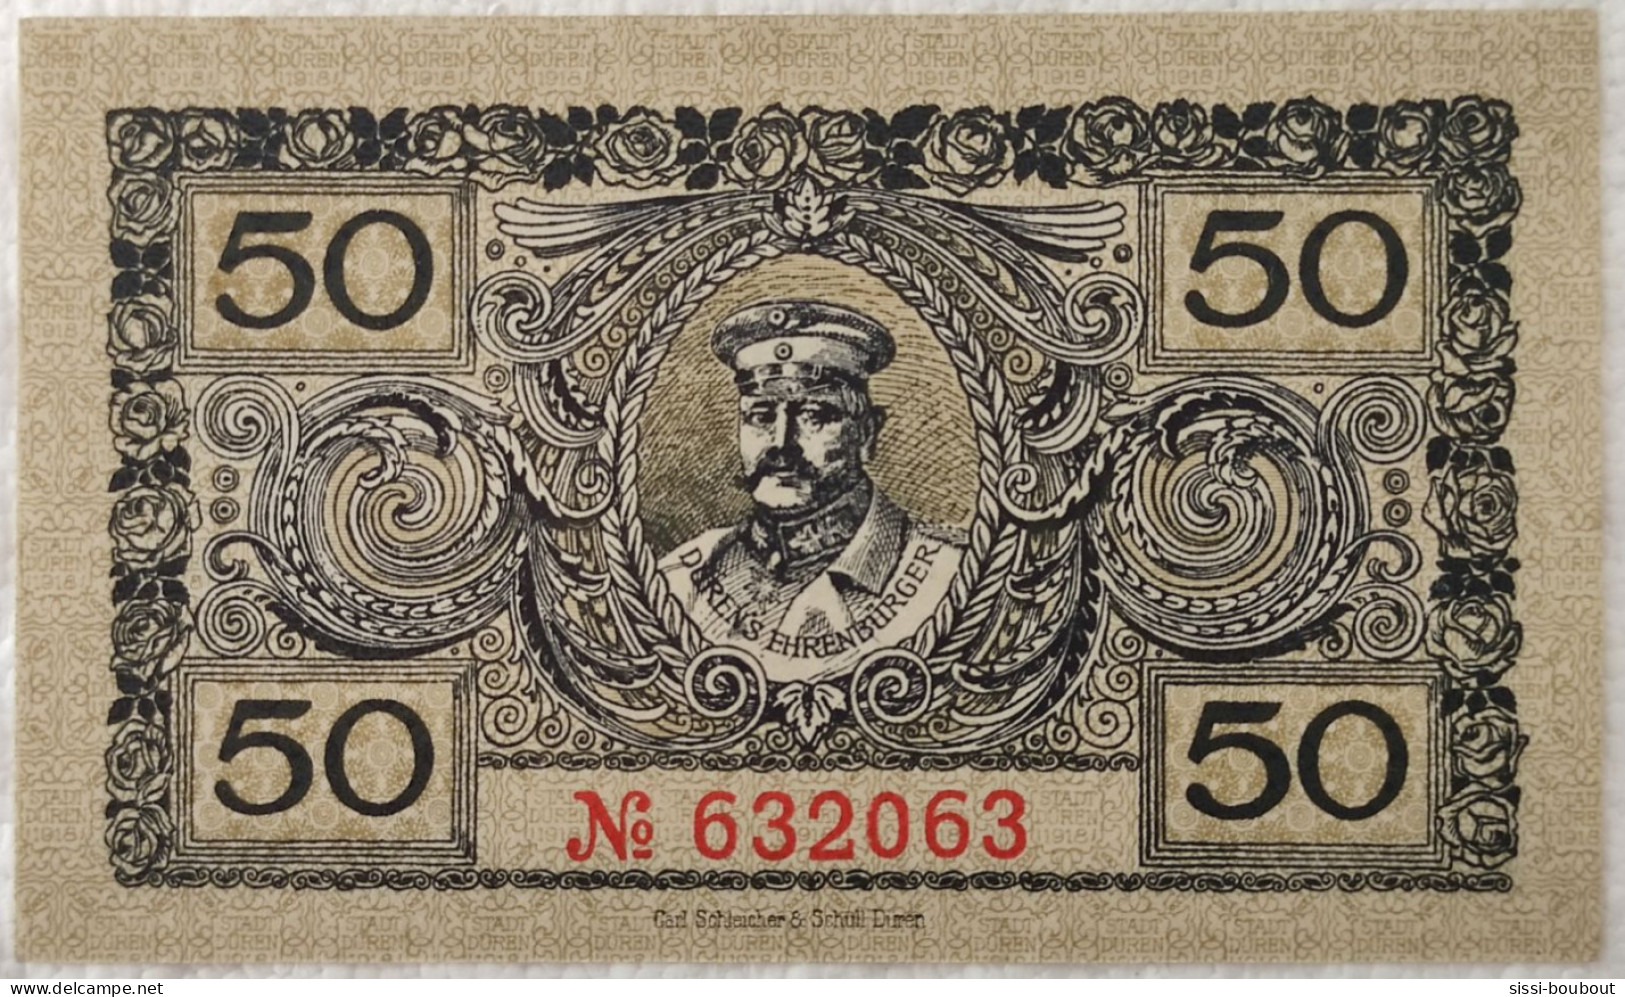 Billet Monnaie De Nécéssitée- Allemagne / Stadt Duren / 1918 / 50 Pfennig / Neuf - Monetari/ Di Necessità